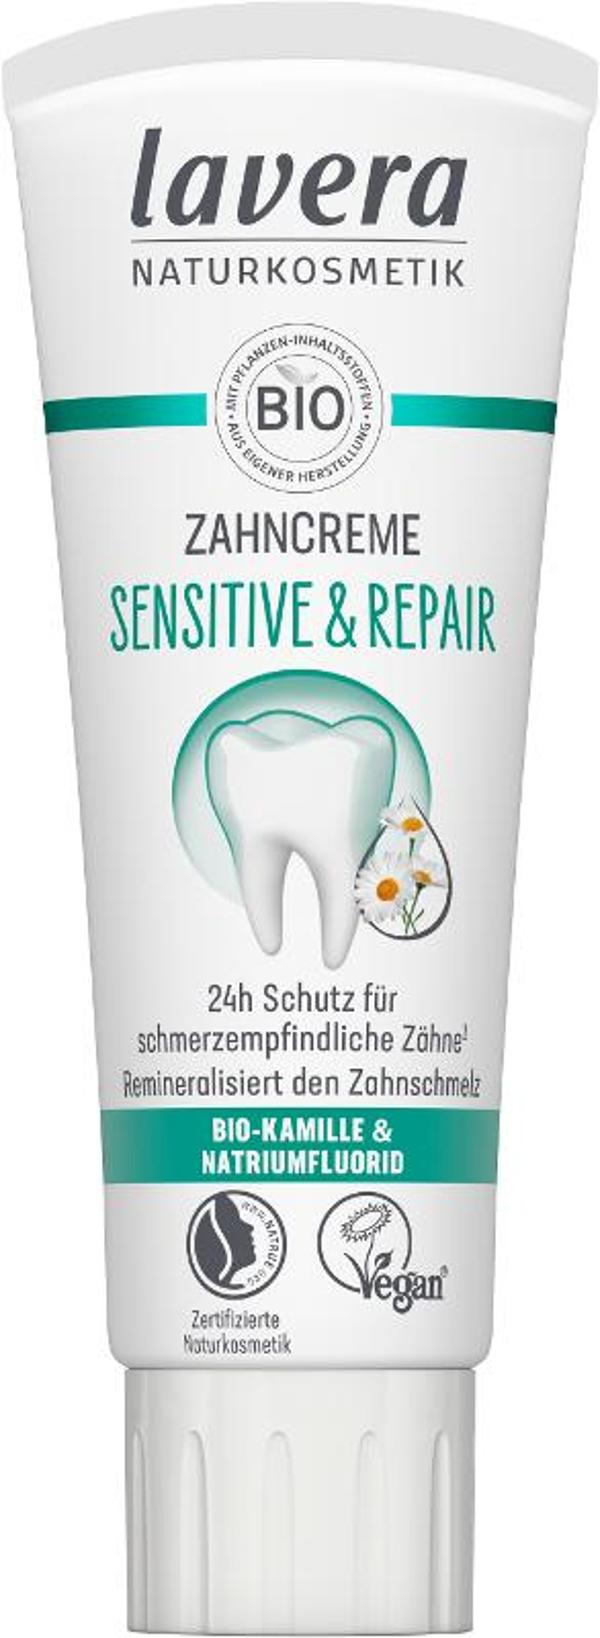 Produktfoto zu Zahncreme sensitiv & repair 75ml